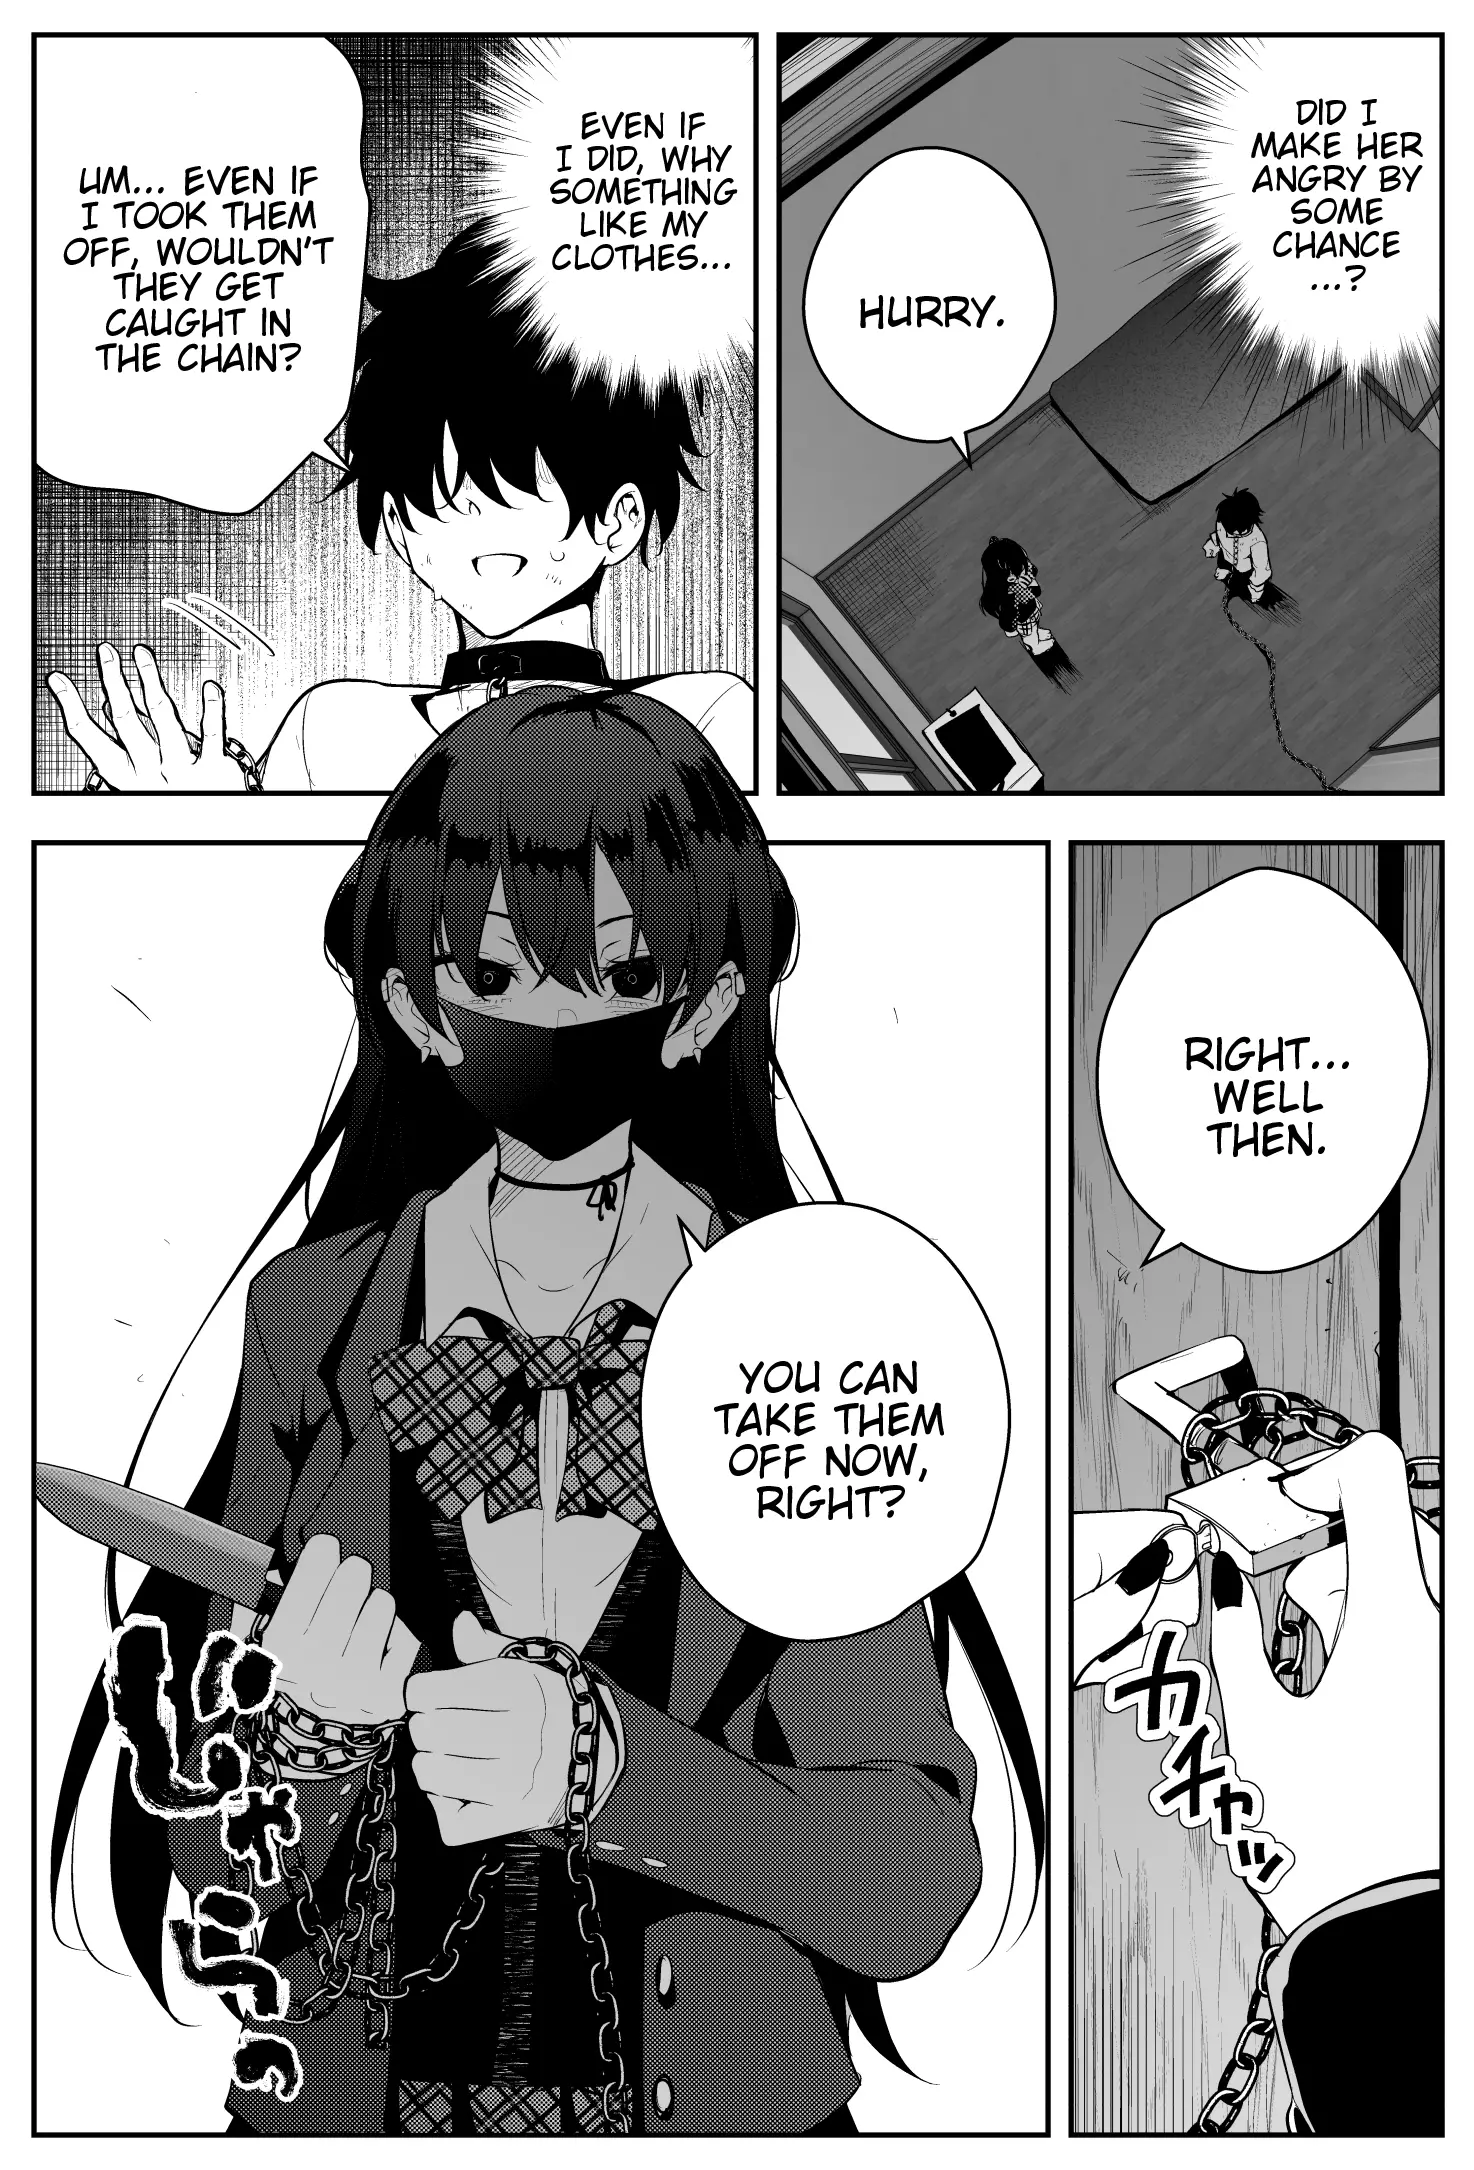 The Story Of A Manga Artist Confined By A Strange High School Girl - 4 page 2-e9e77e78